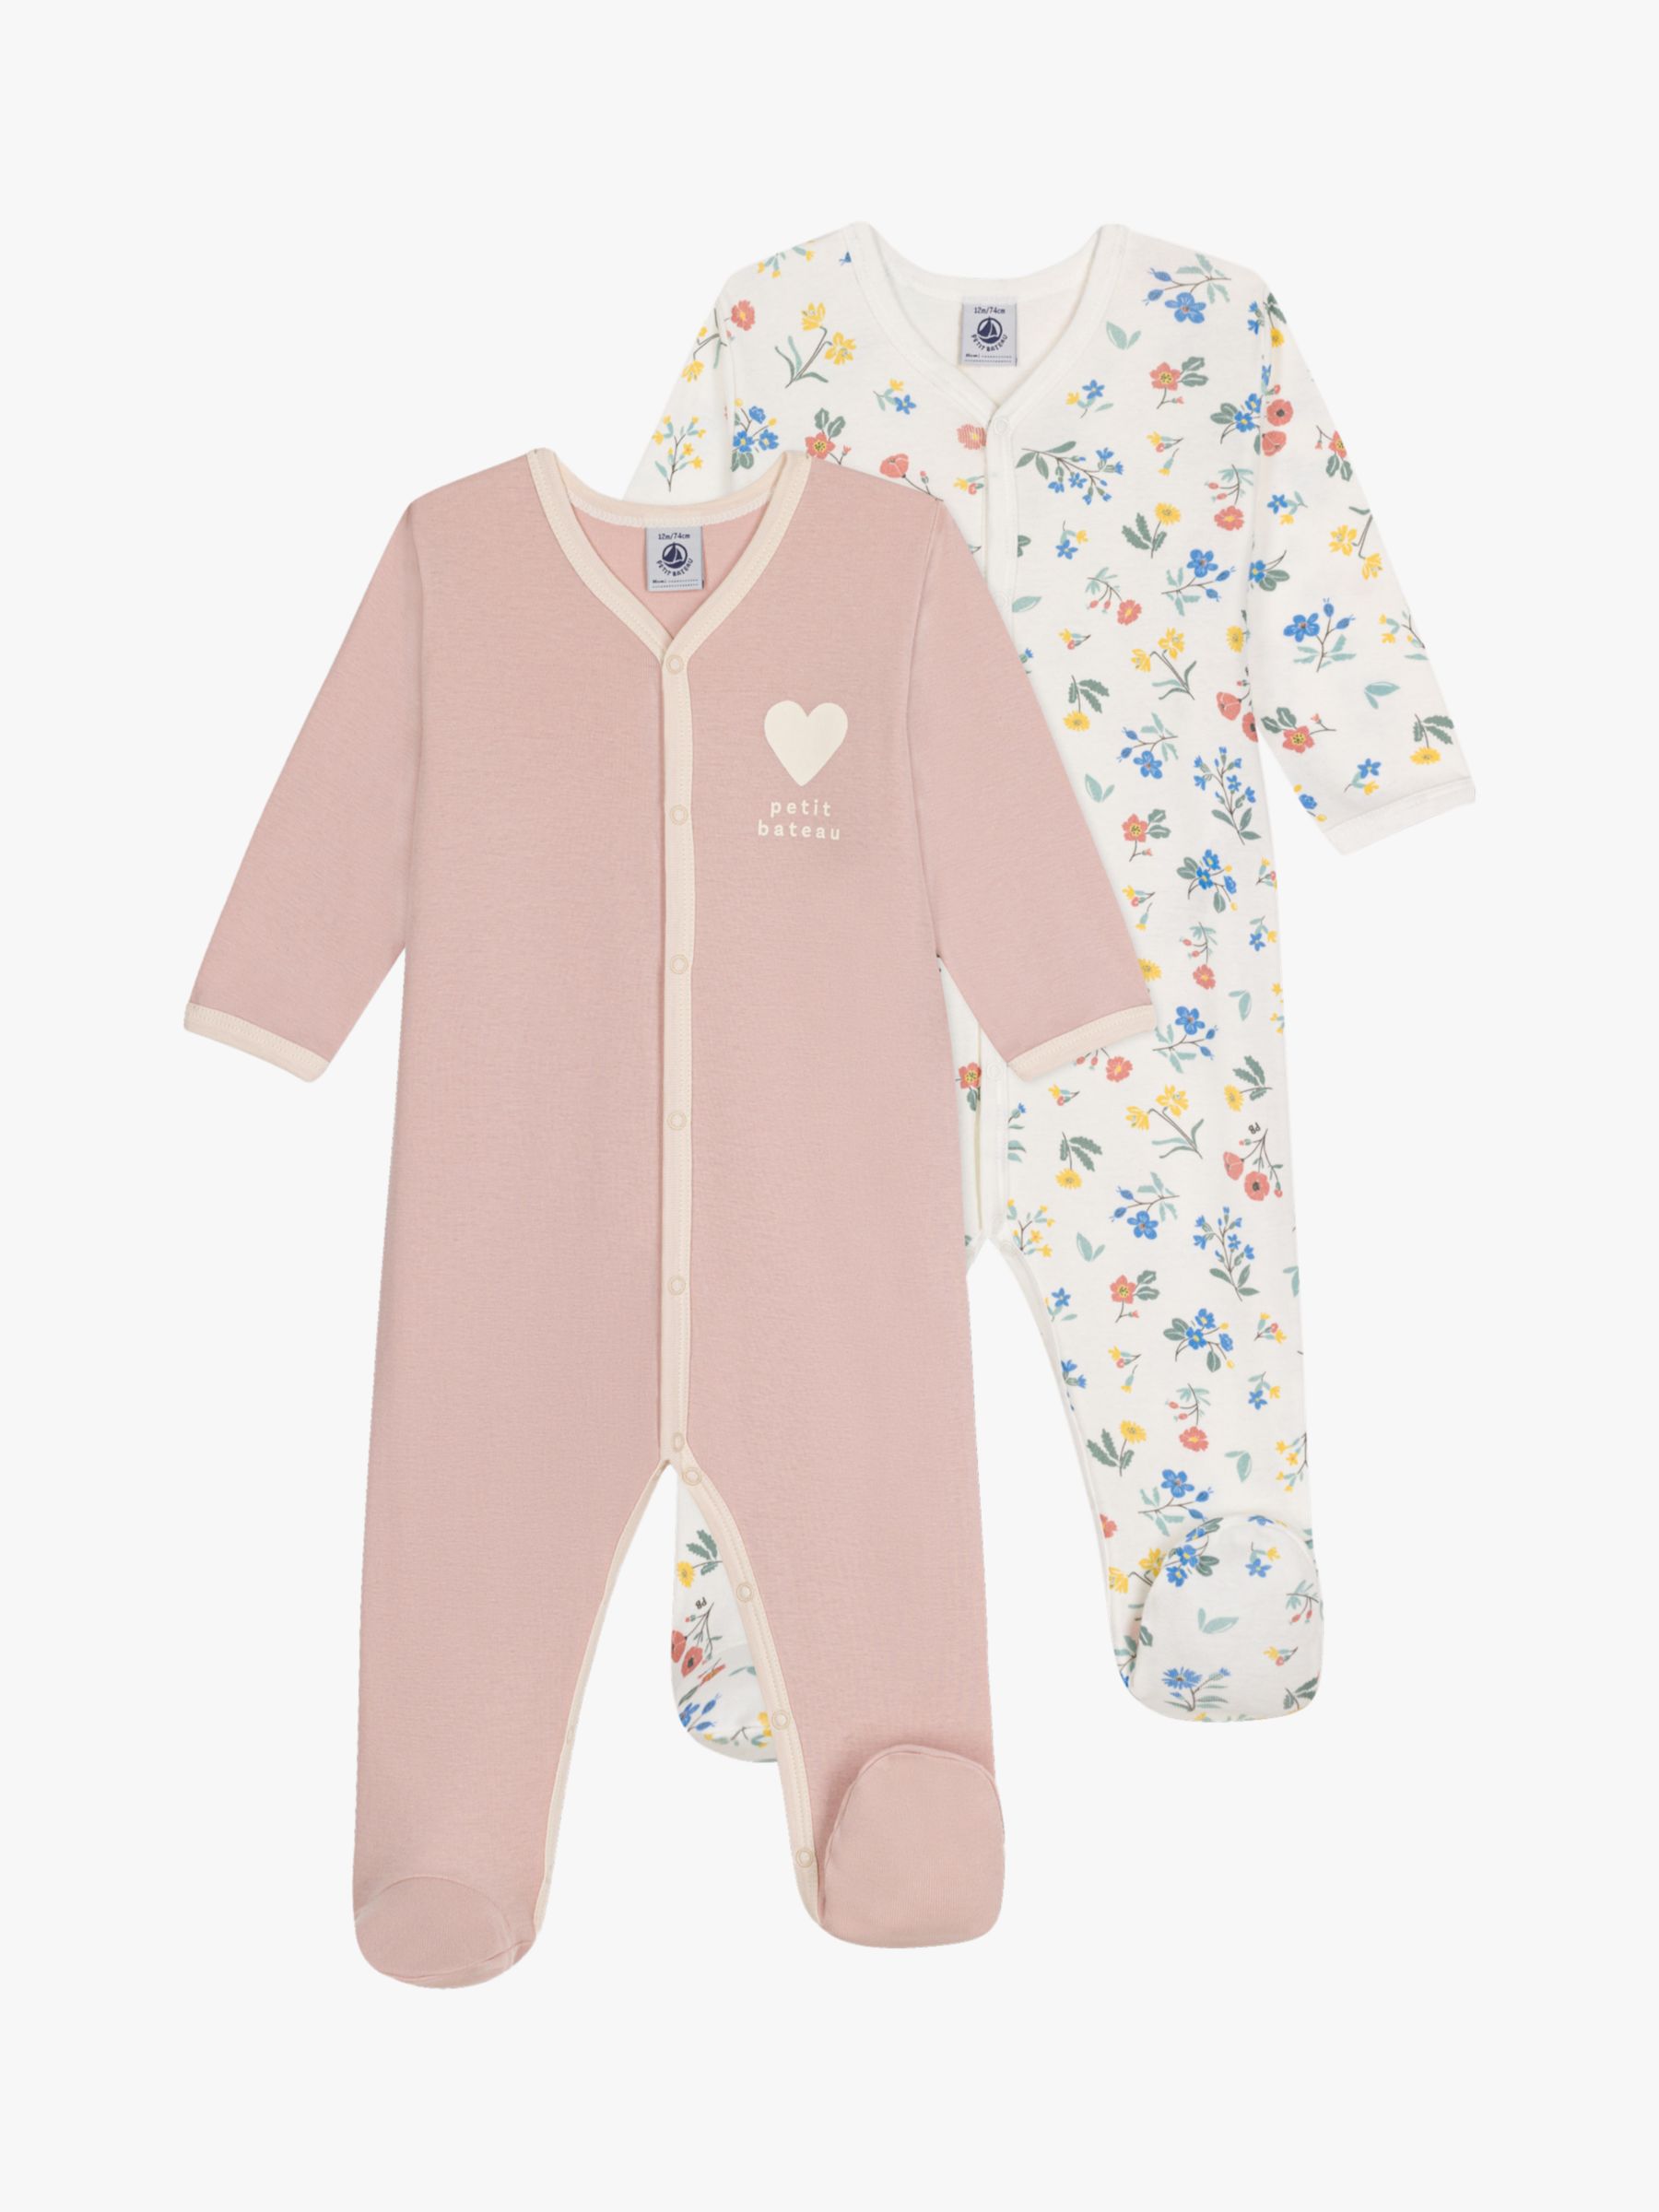 Petit Bateau Baby Floral Print/Plain Sleepsuits, Pack Of 2, Multi, 3 months